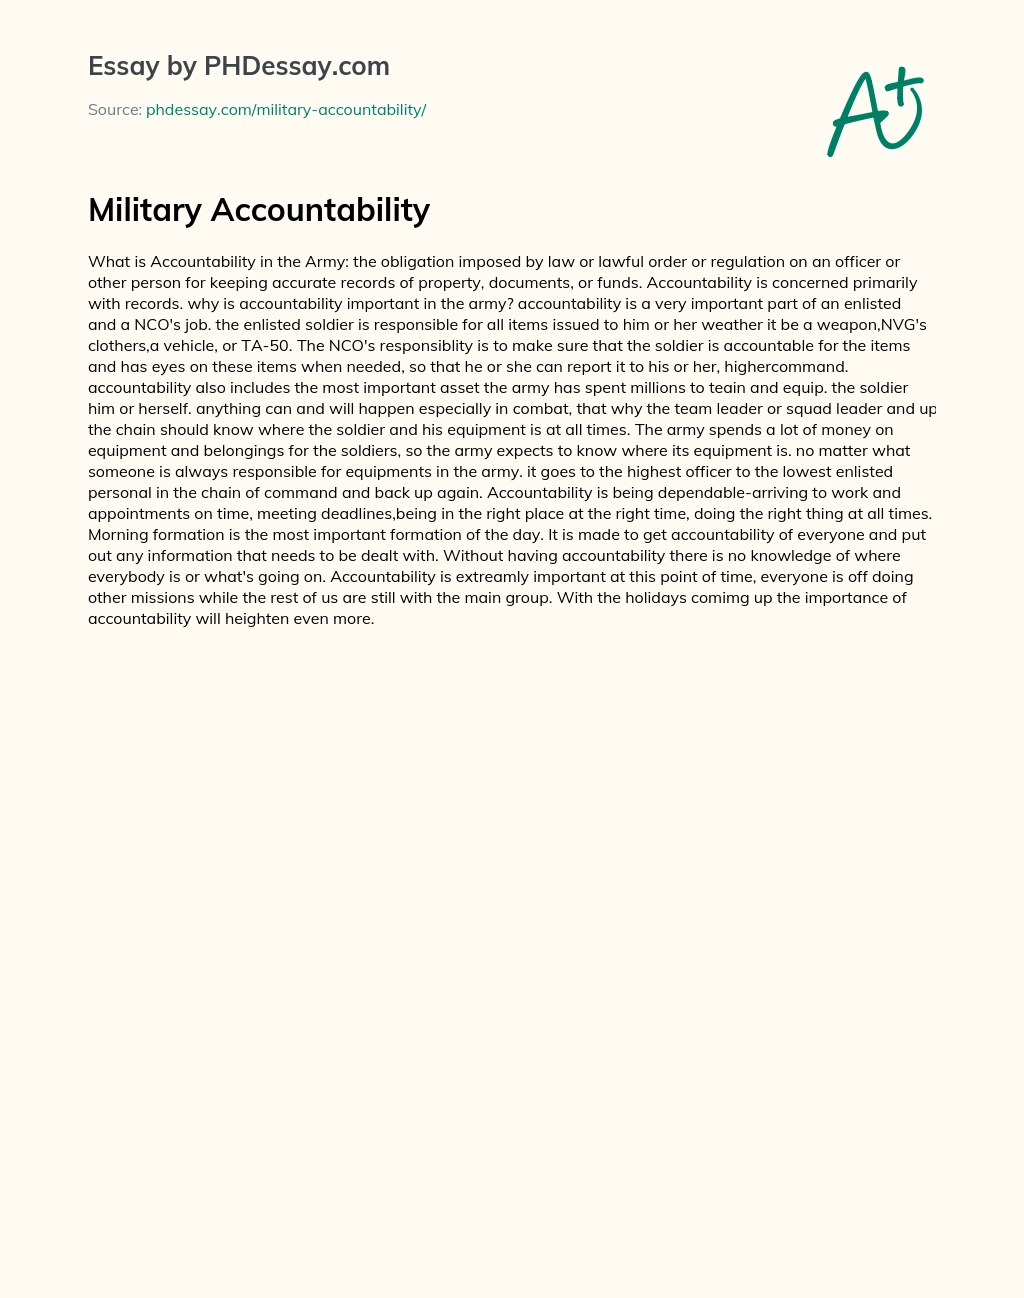 Military Accountability essay